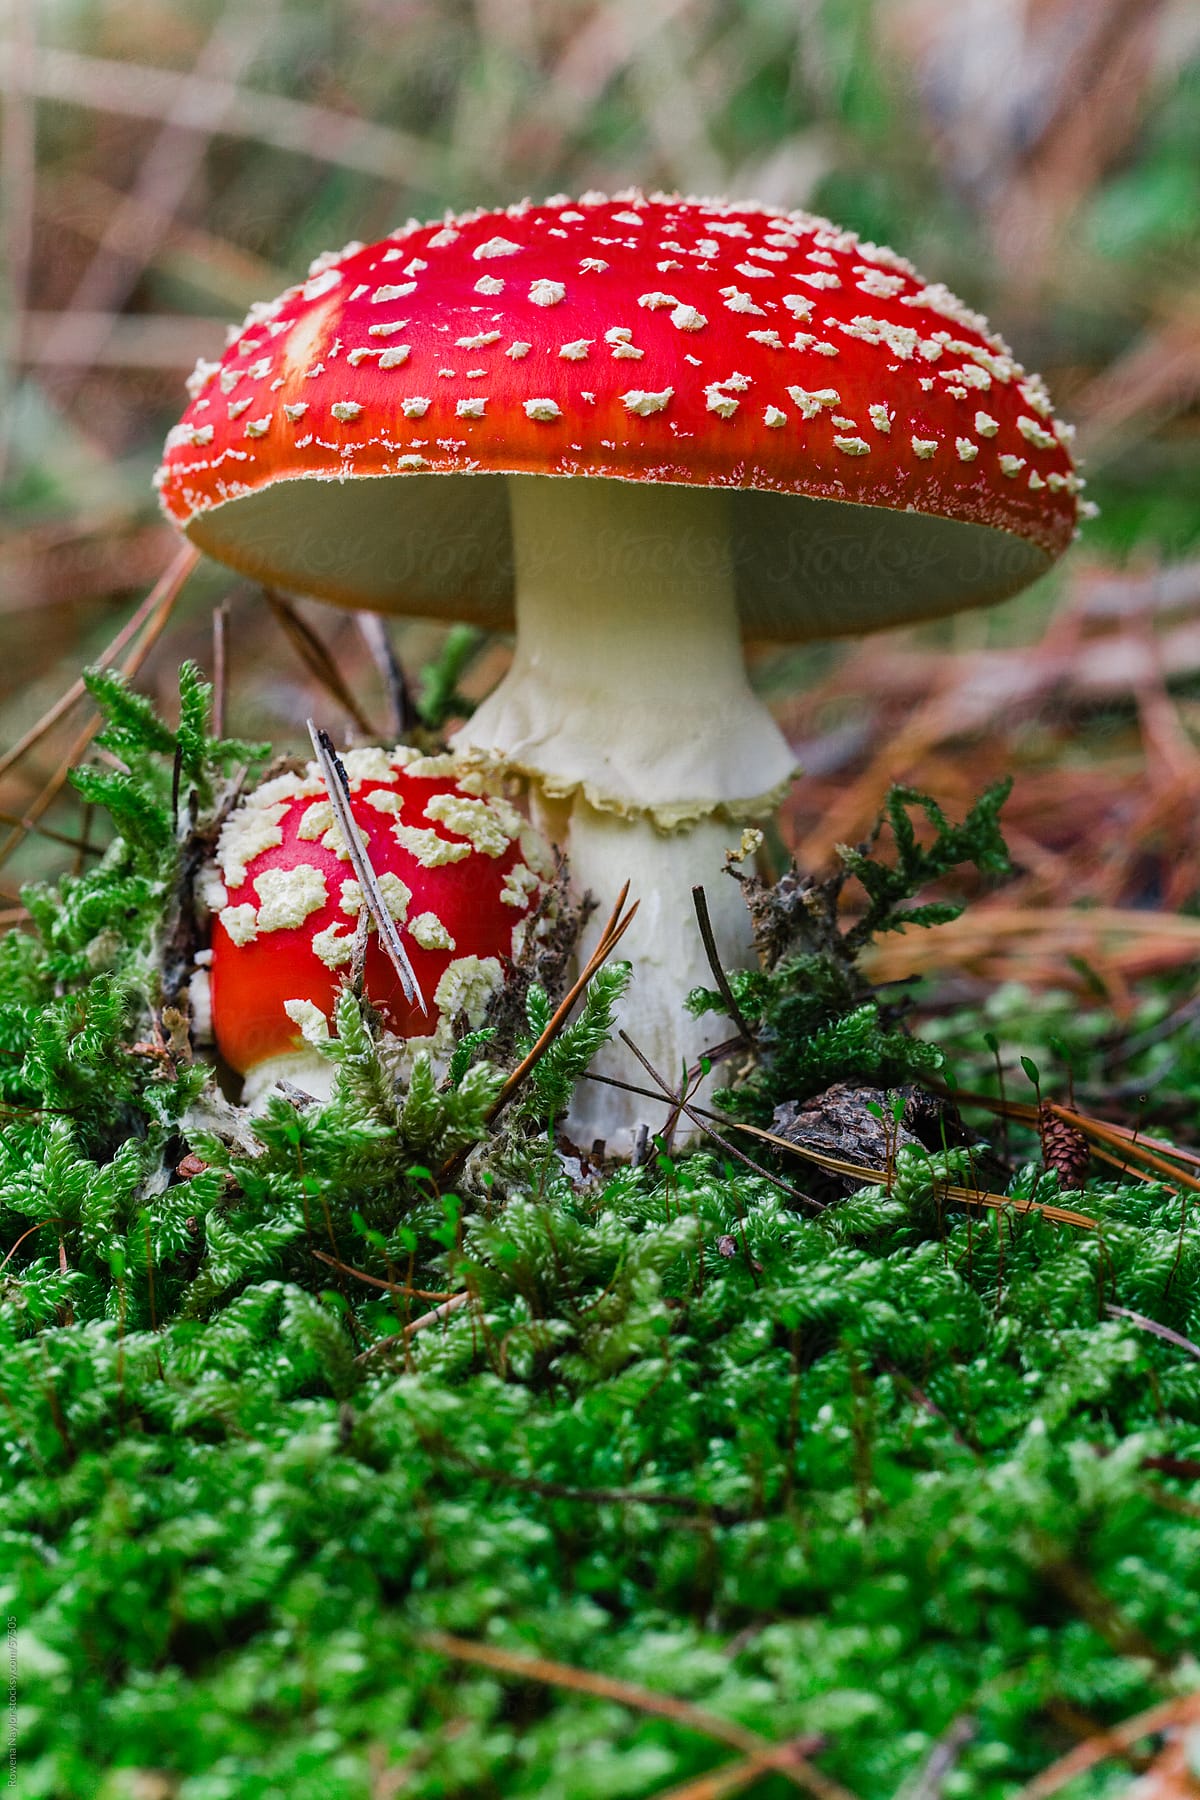 Toxic wild Mushrooms